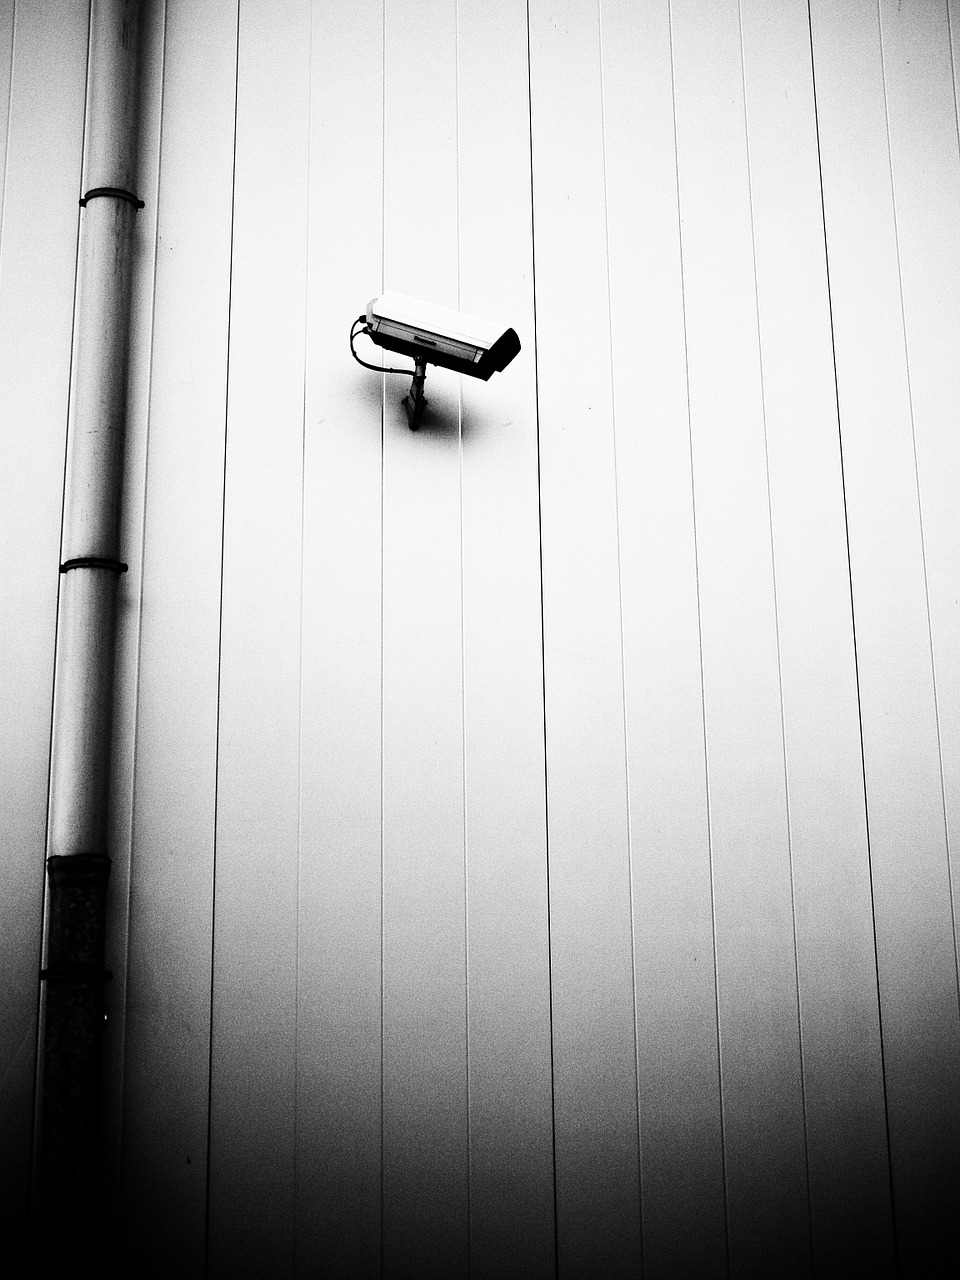 camera security system security camera free photo